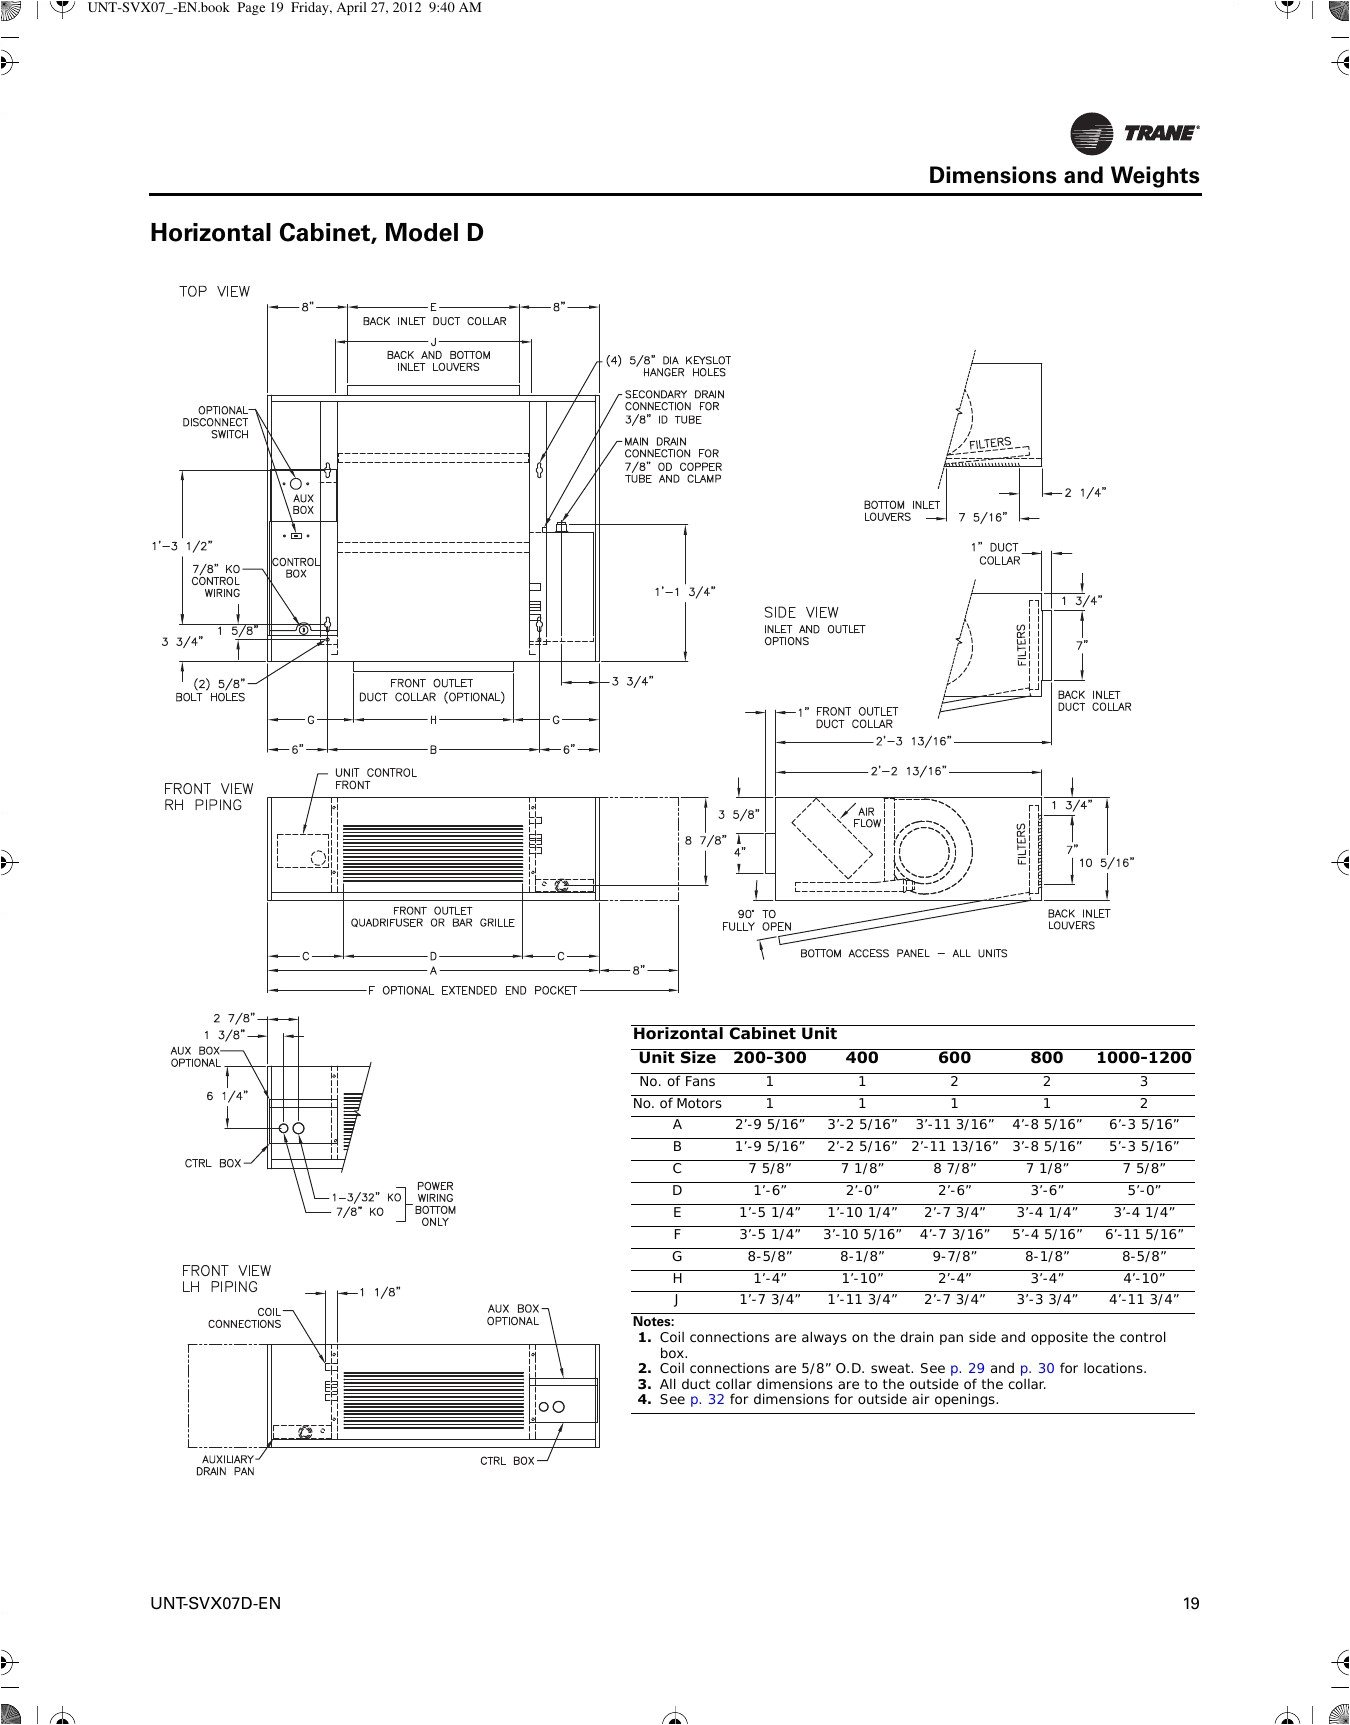 attwood bilge pump wiring diagram inspirational pump down refrigeration system wiring diagram best airtemp heat